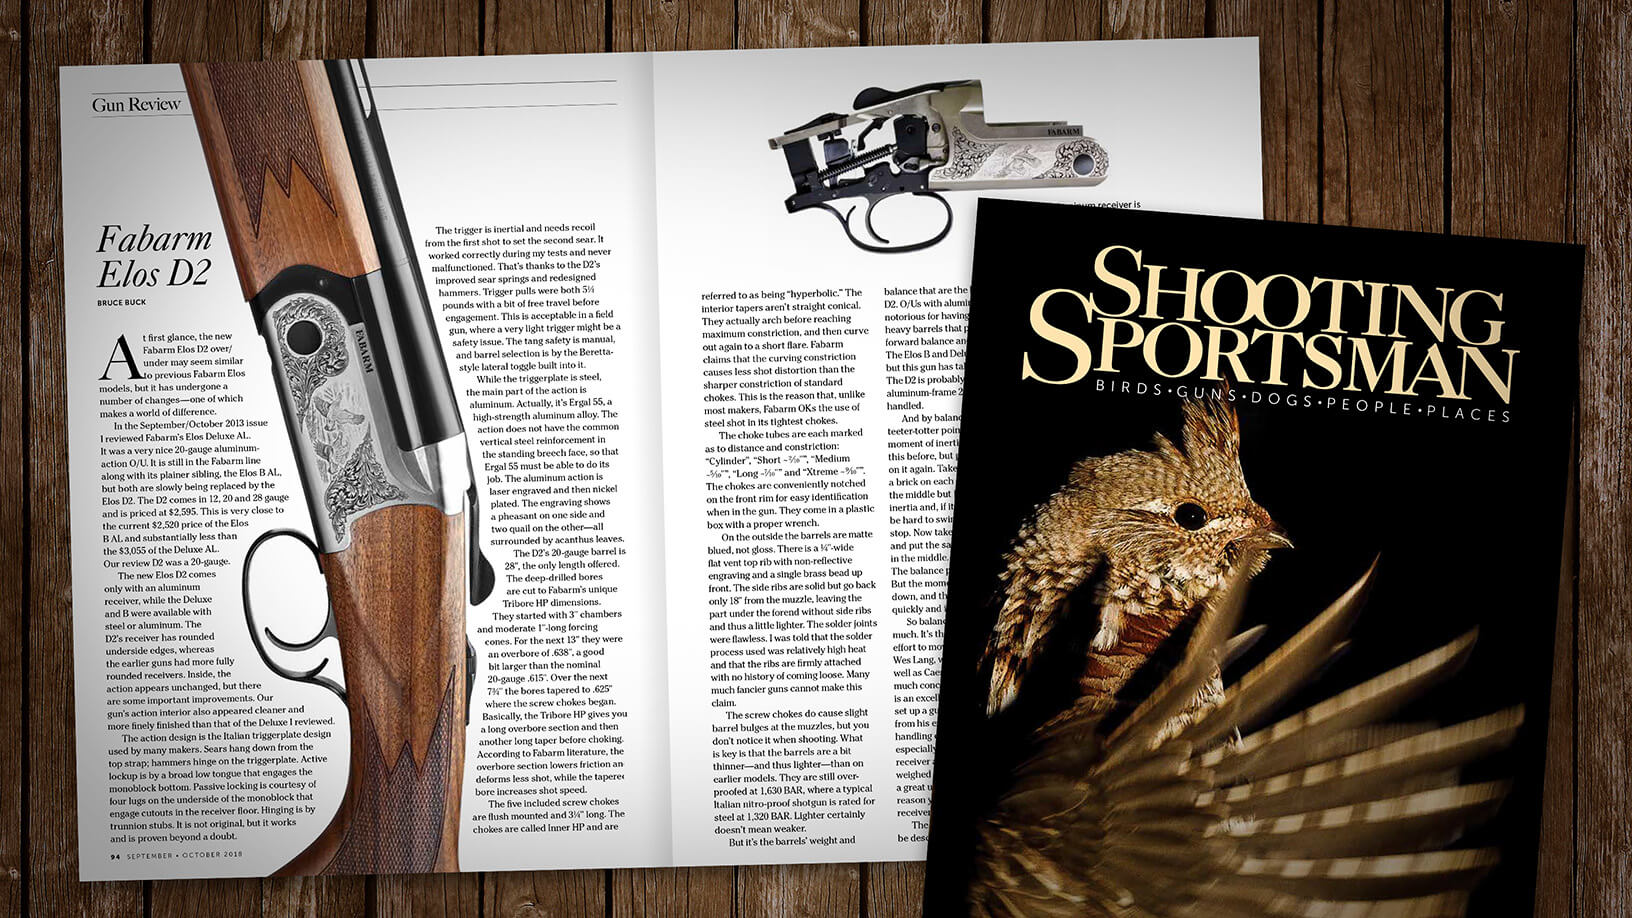 [Shooting Sportsman: 08.18] Gun Review: Fabarm Elos D2 by Bruce Buck